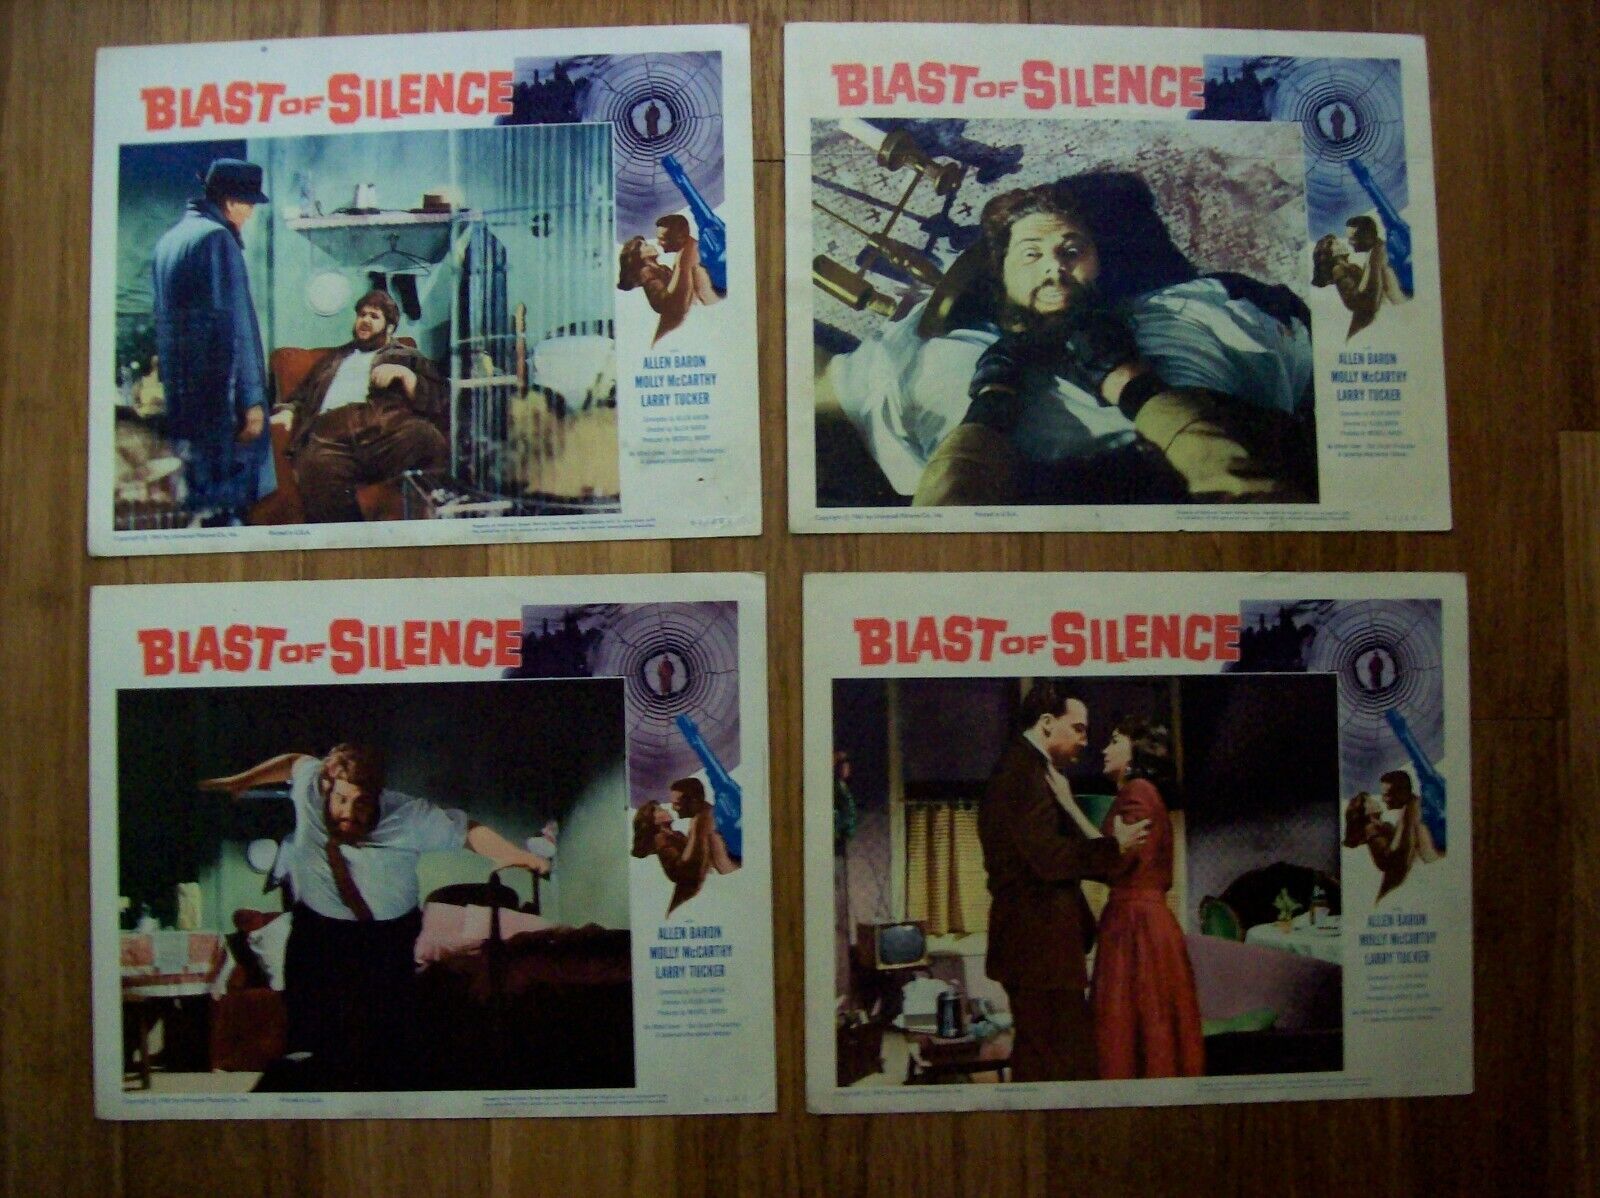 ORIGINAL, COMPLETE BLAST OF SILENCE LOBBY CARD SET. Без бренда - фотография #2